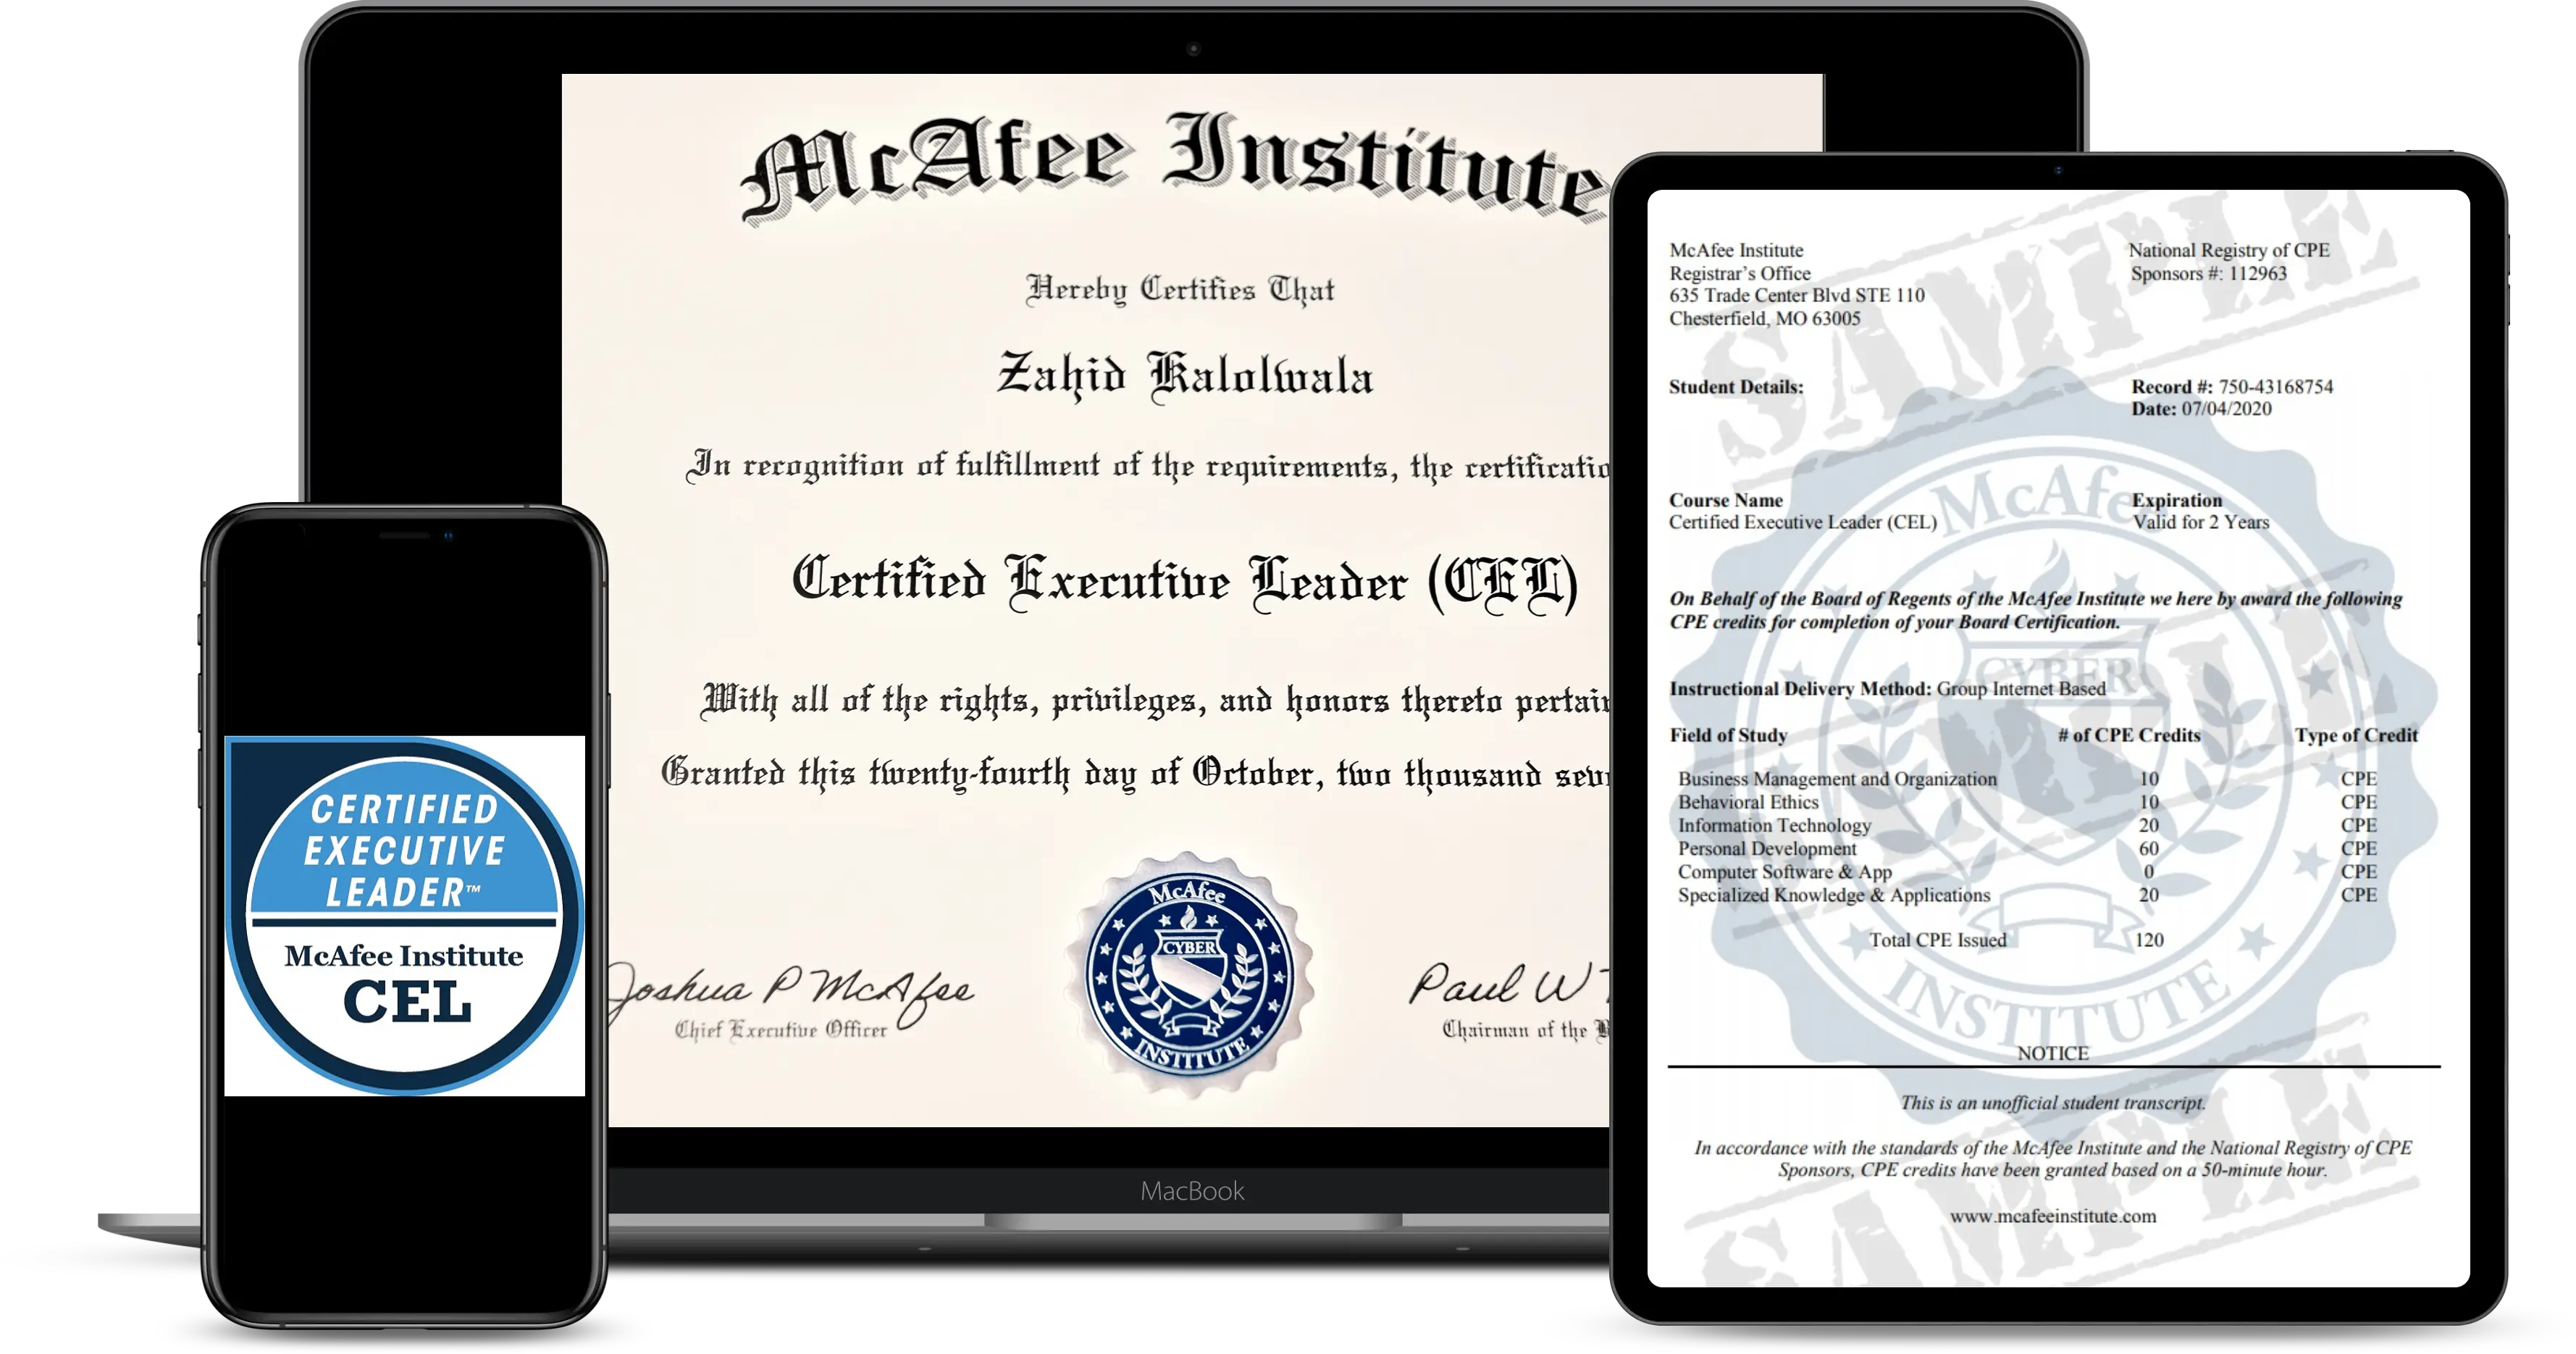 Certified Executive Leader (CEL) - McAfee Institute